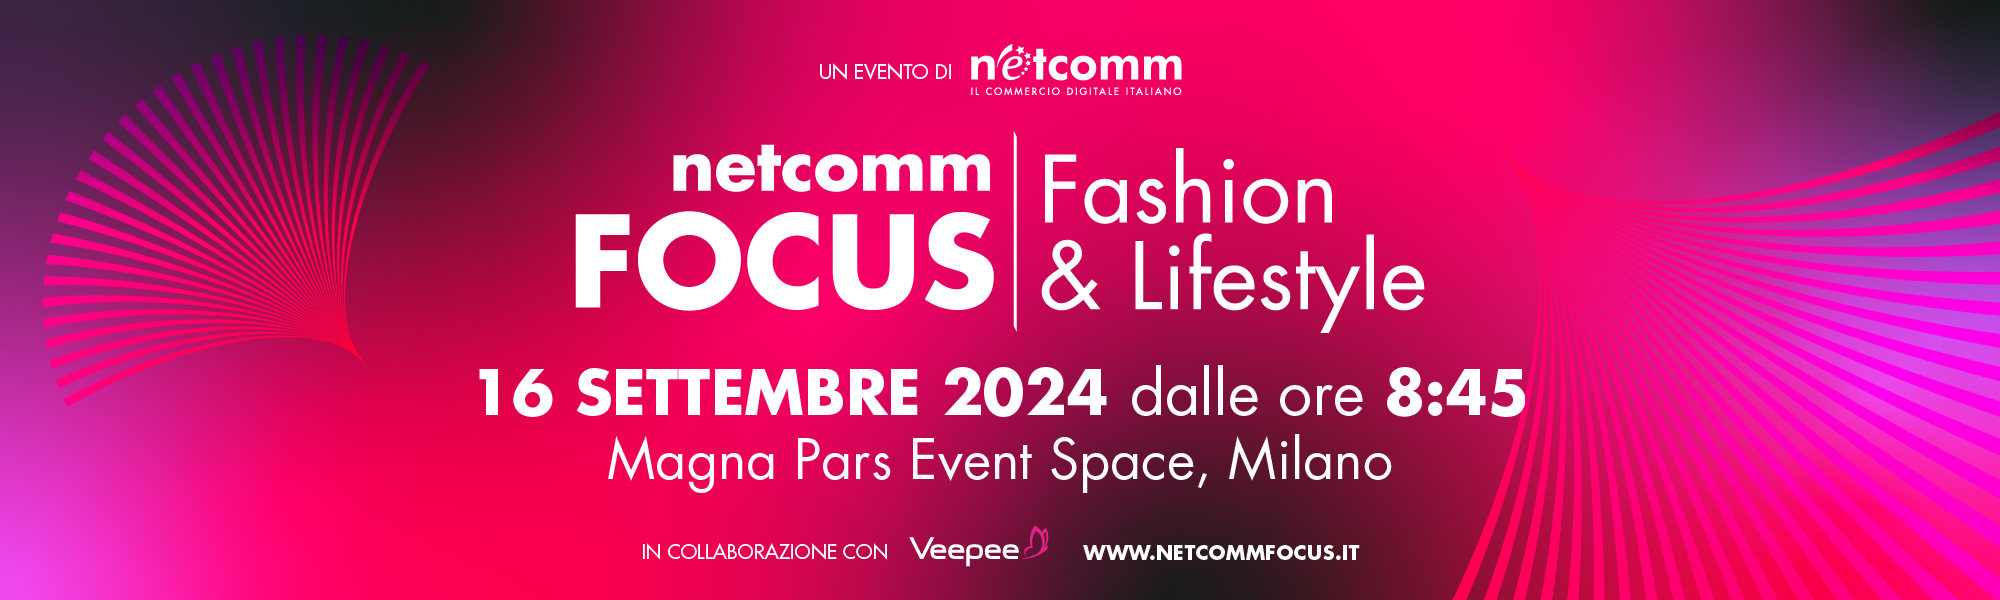 Netcomm FOCUS Fashion & Lifestyle 2024